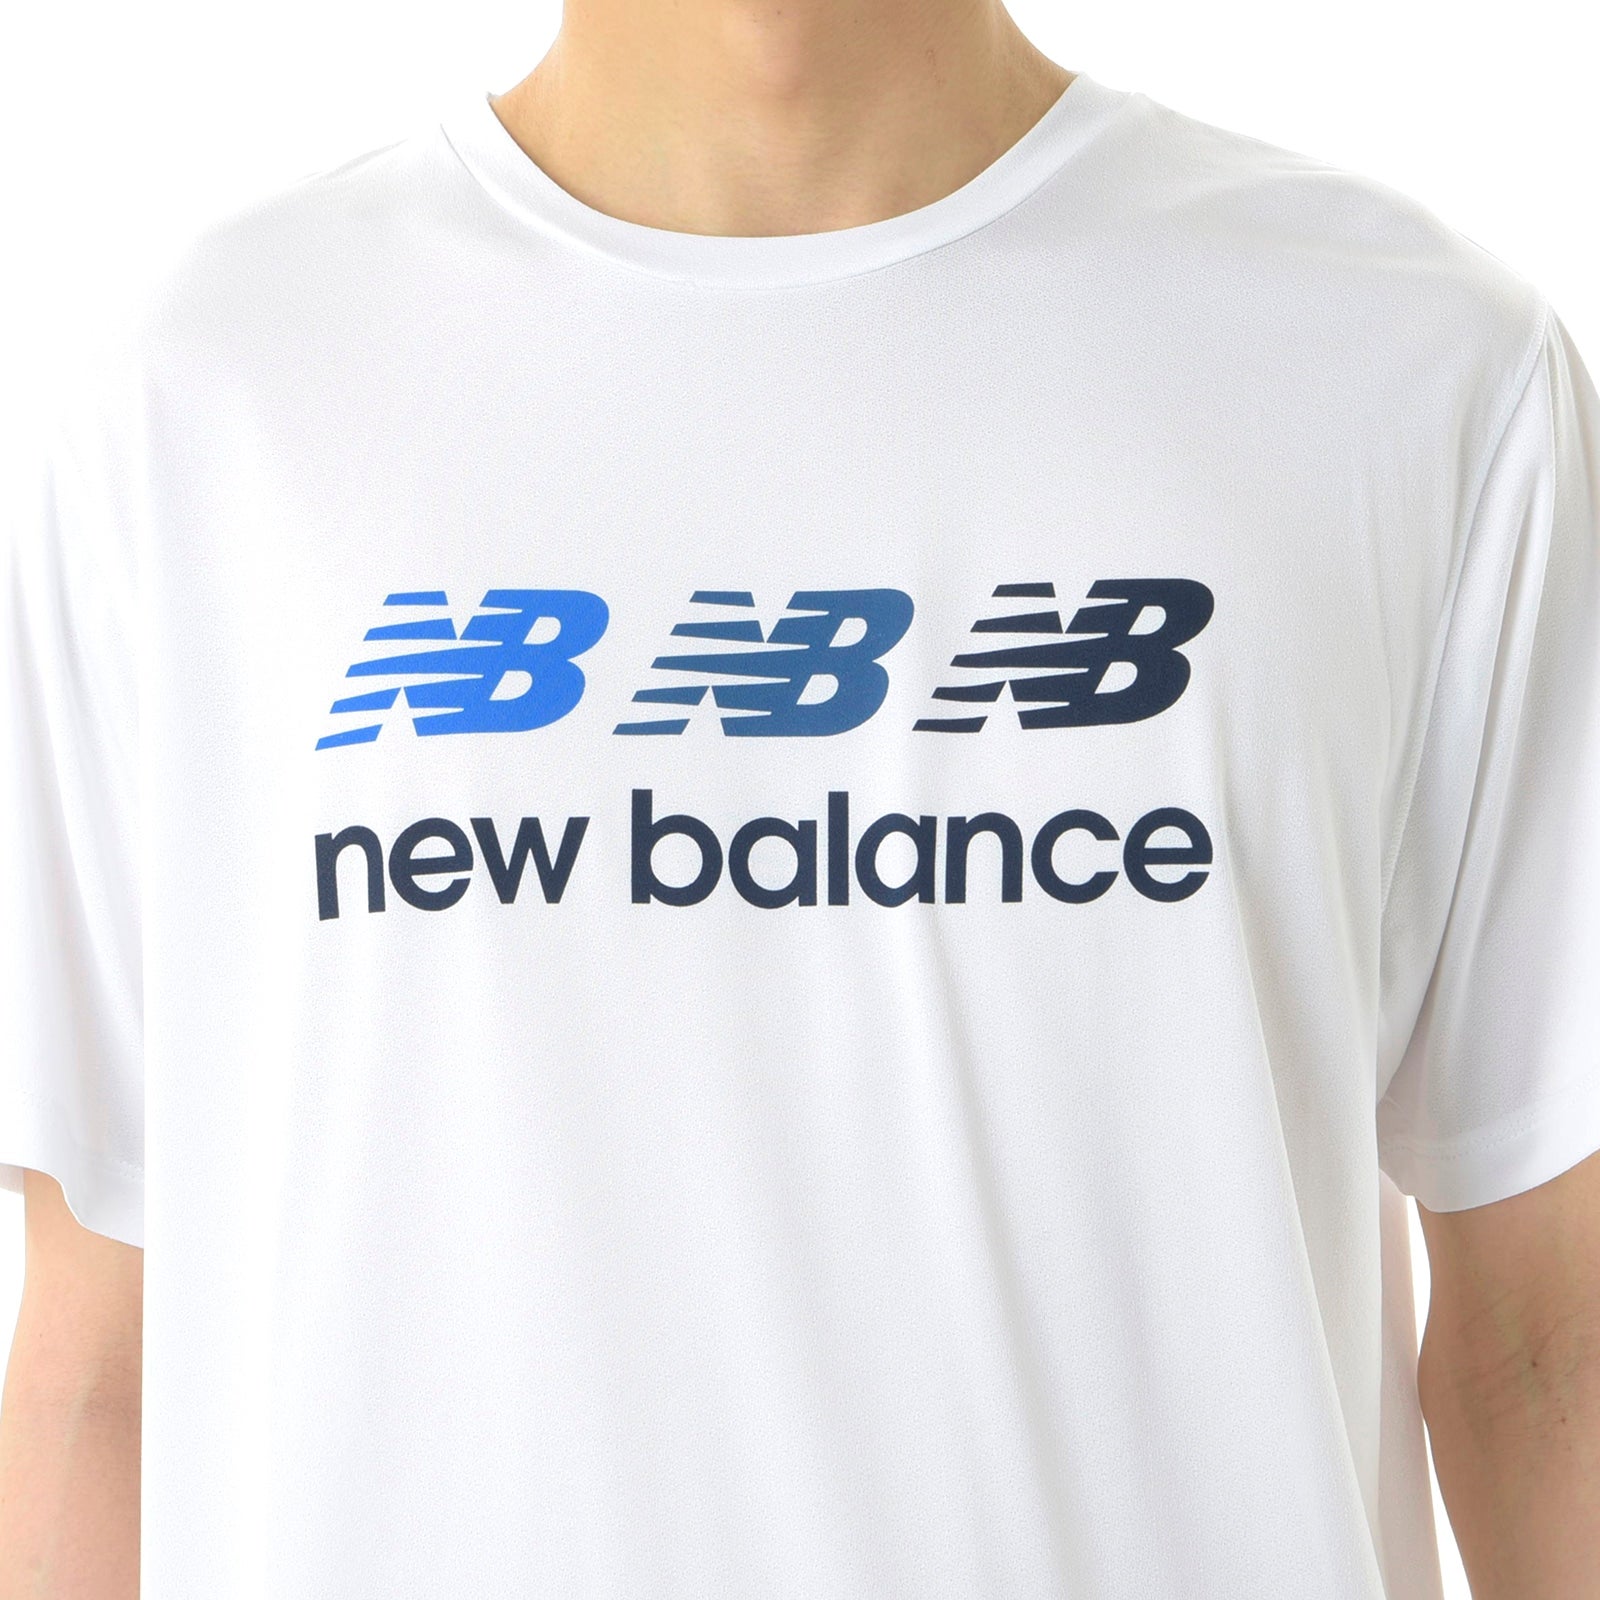 Performance Graphic Short Sleeve T-Shirt (Triple Logo)